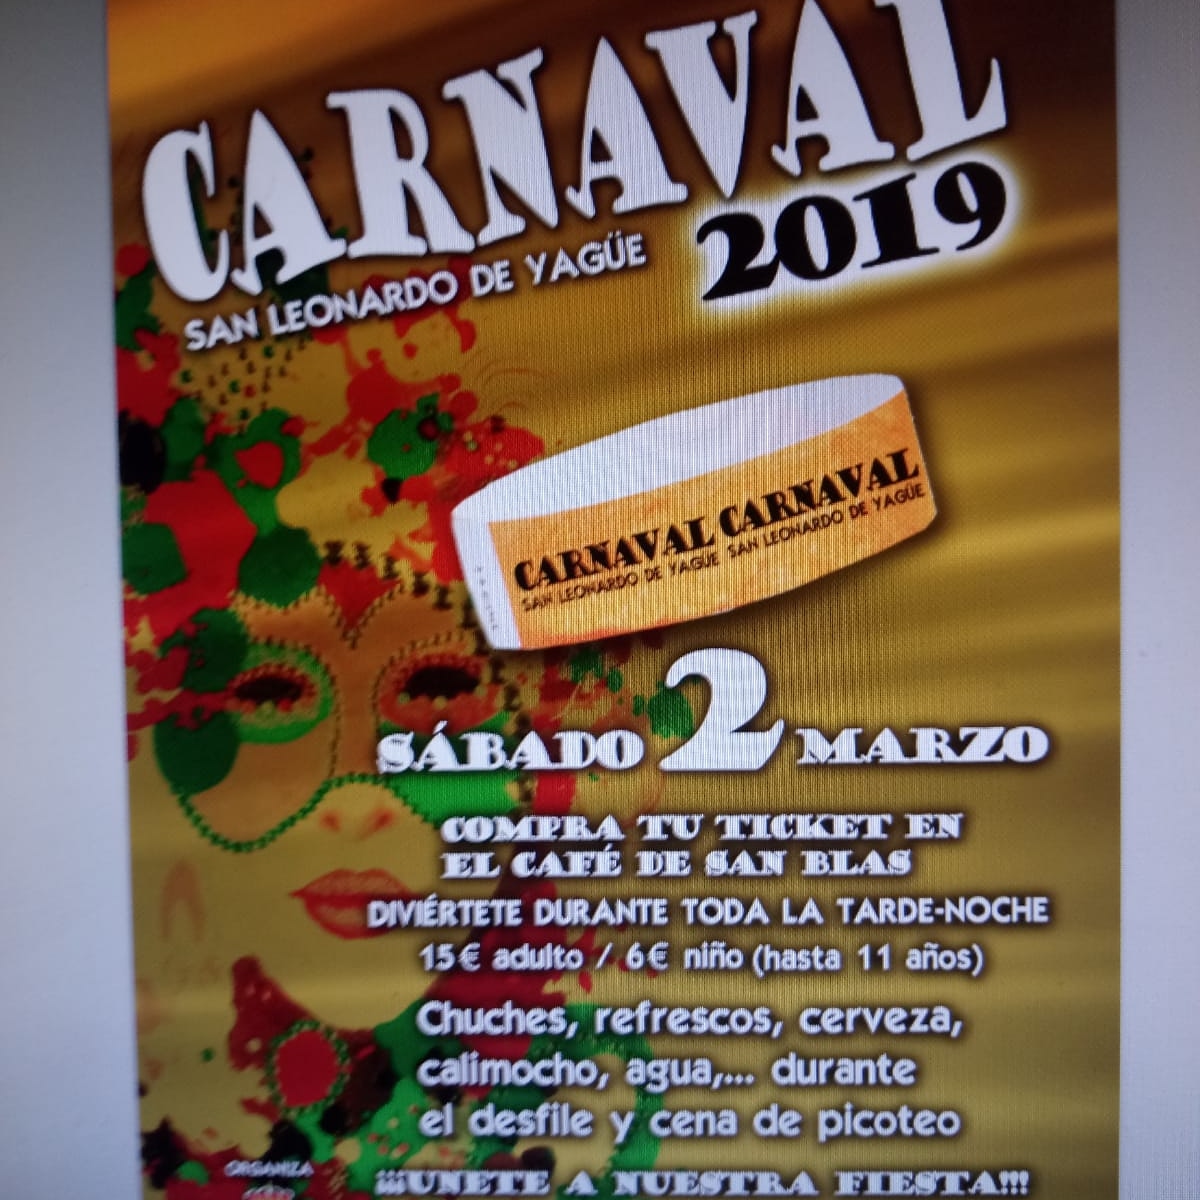 Carnaval de San Leonardo de Yagüe